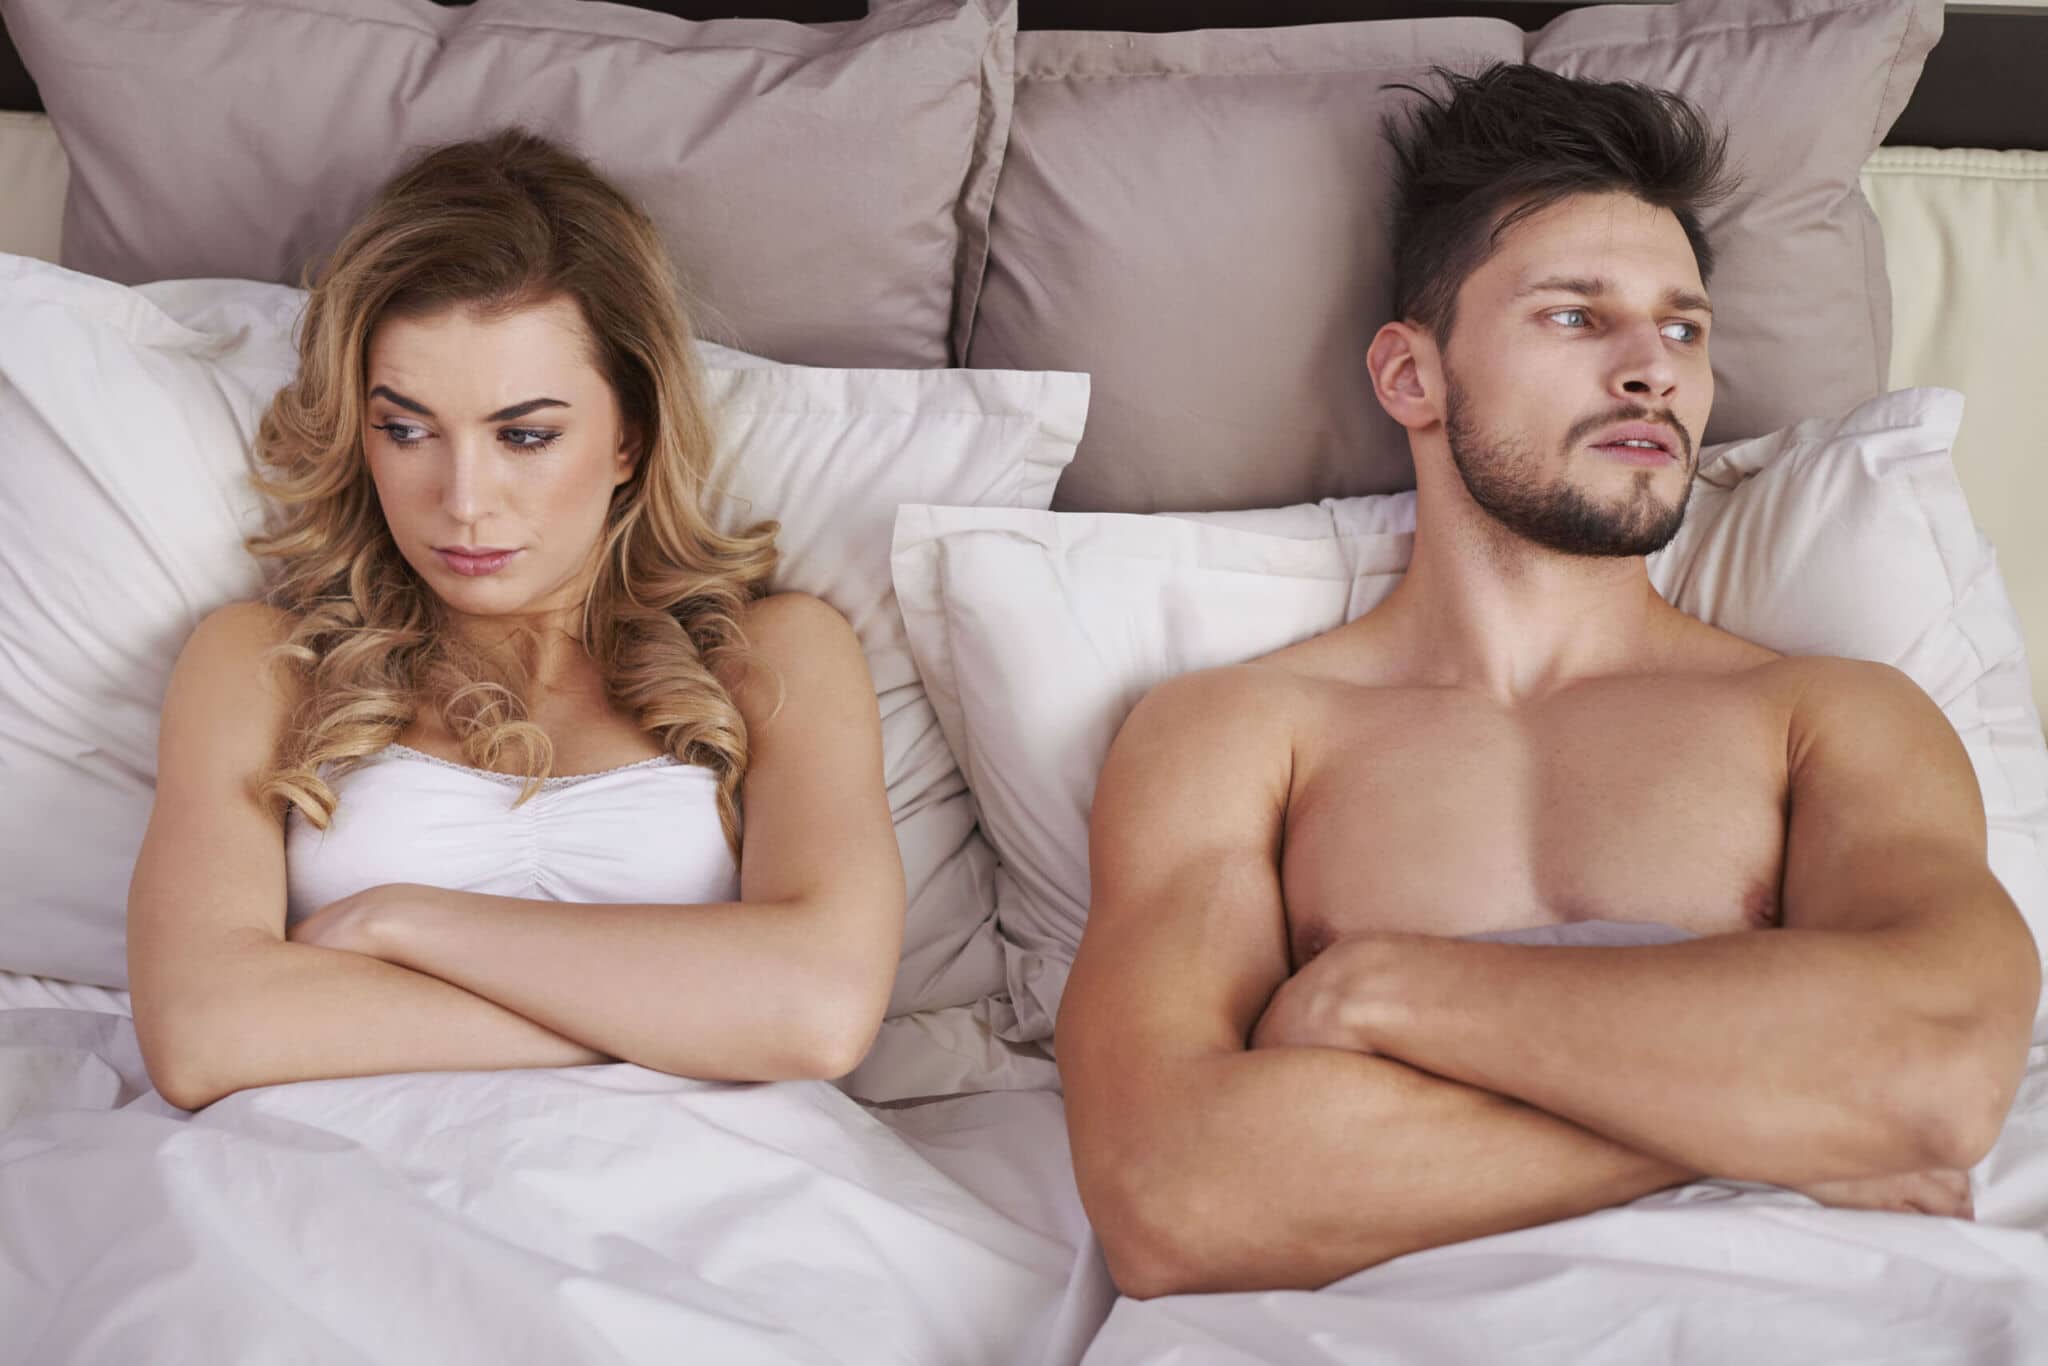 Men's 4 Most Common Questions About Sex